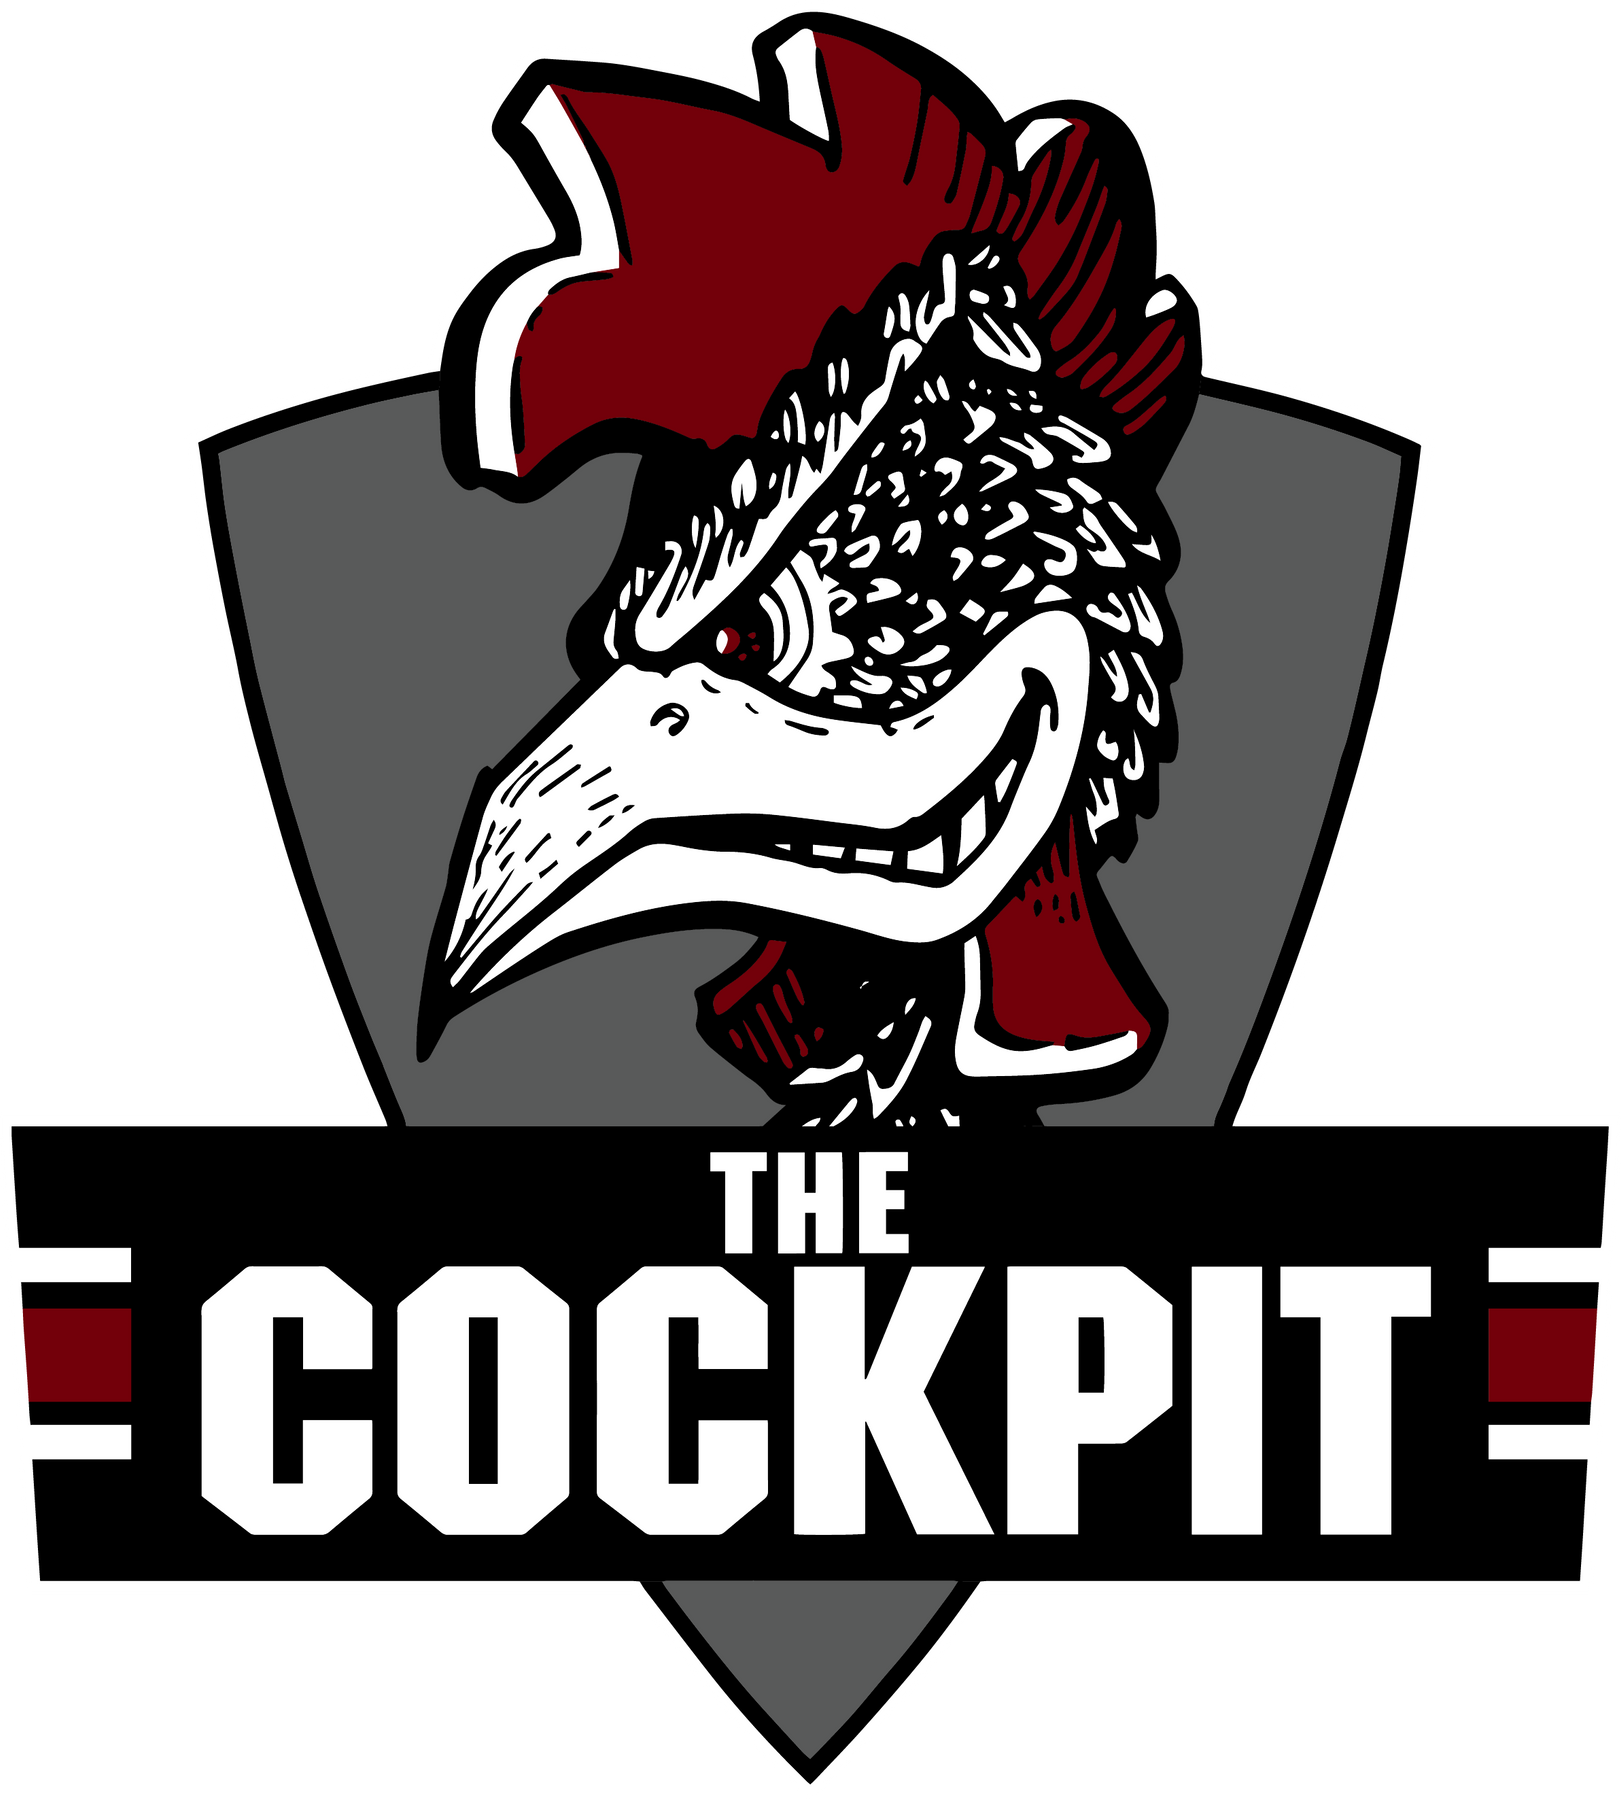 Cockpit – University of South Carolina Athletics